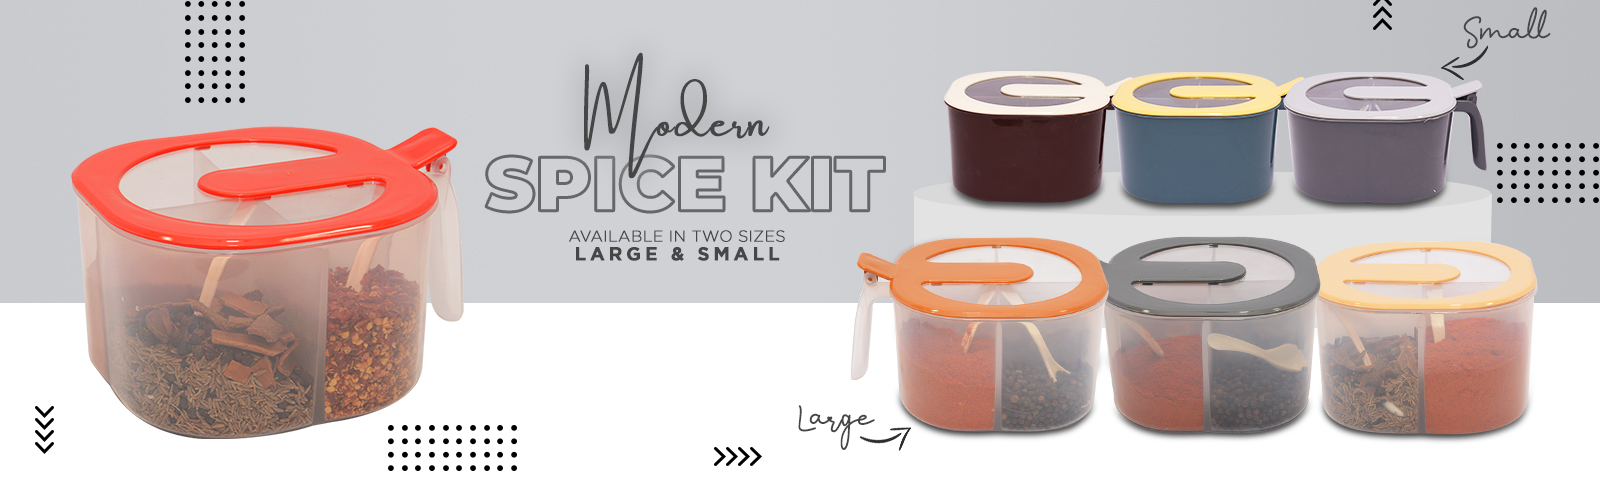 maxware household - spice kit